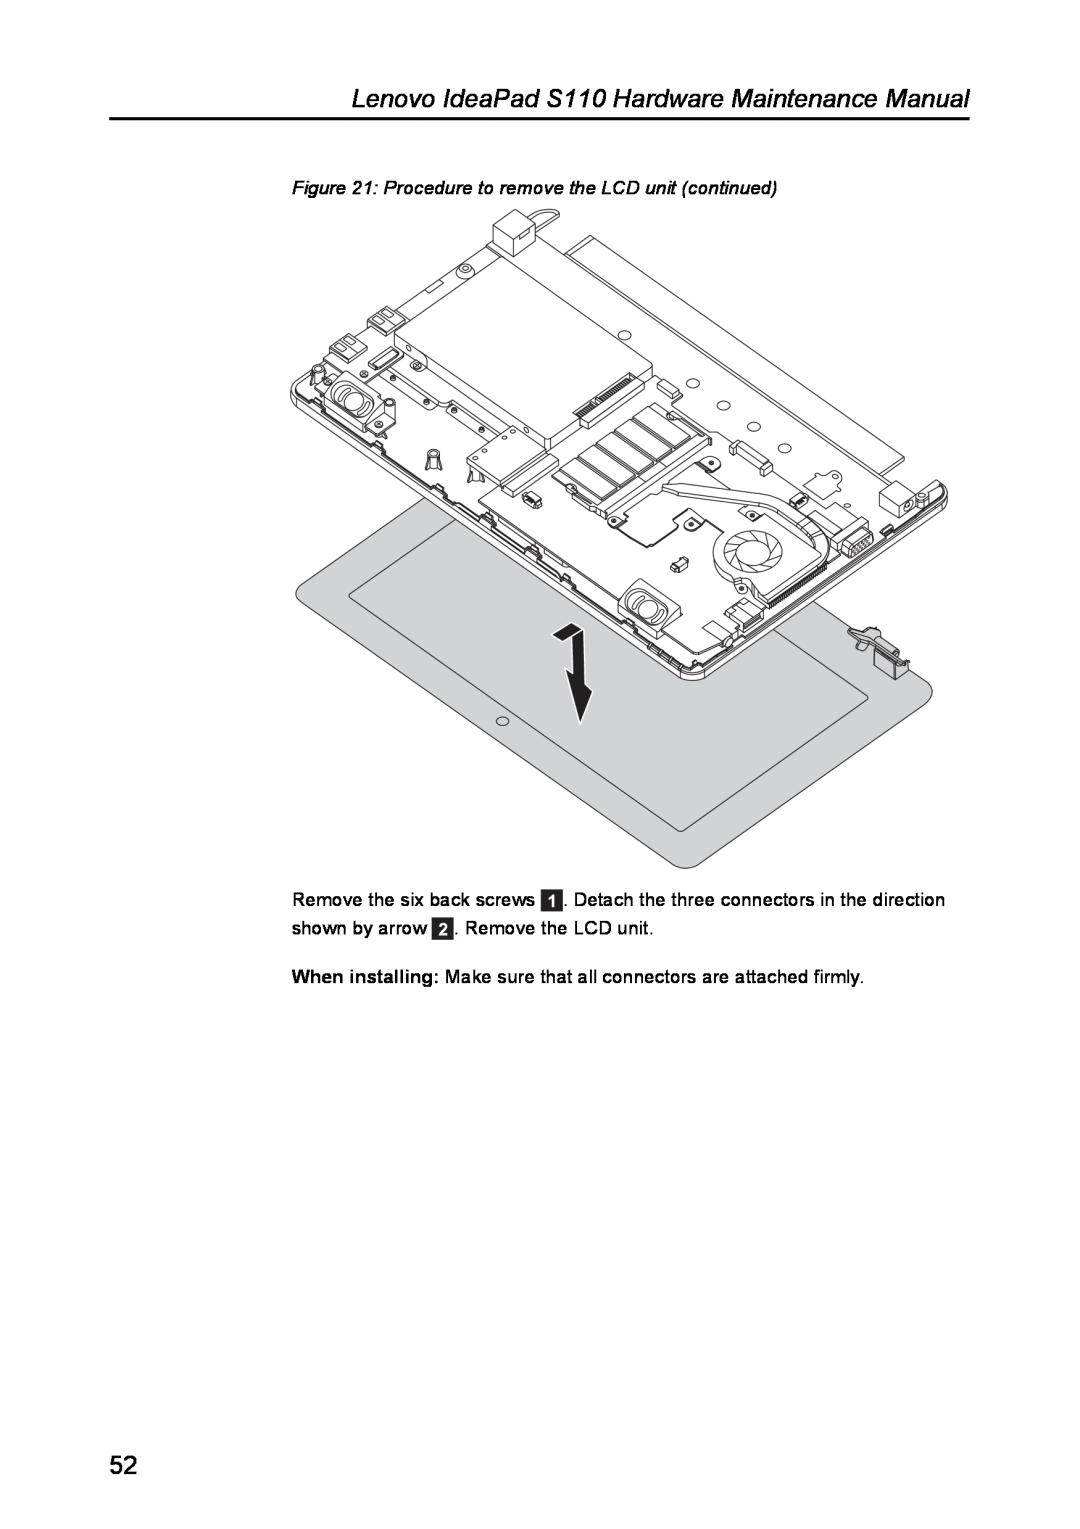 Lenovo manual Procedure to remove the LCD unit continued, Lenovo IdeaPad S110 Hardware Maintenance Manual 